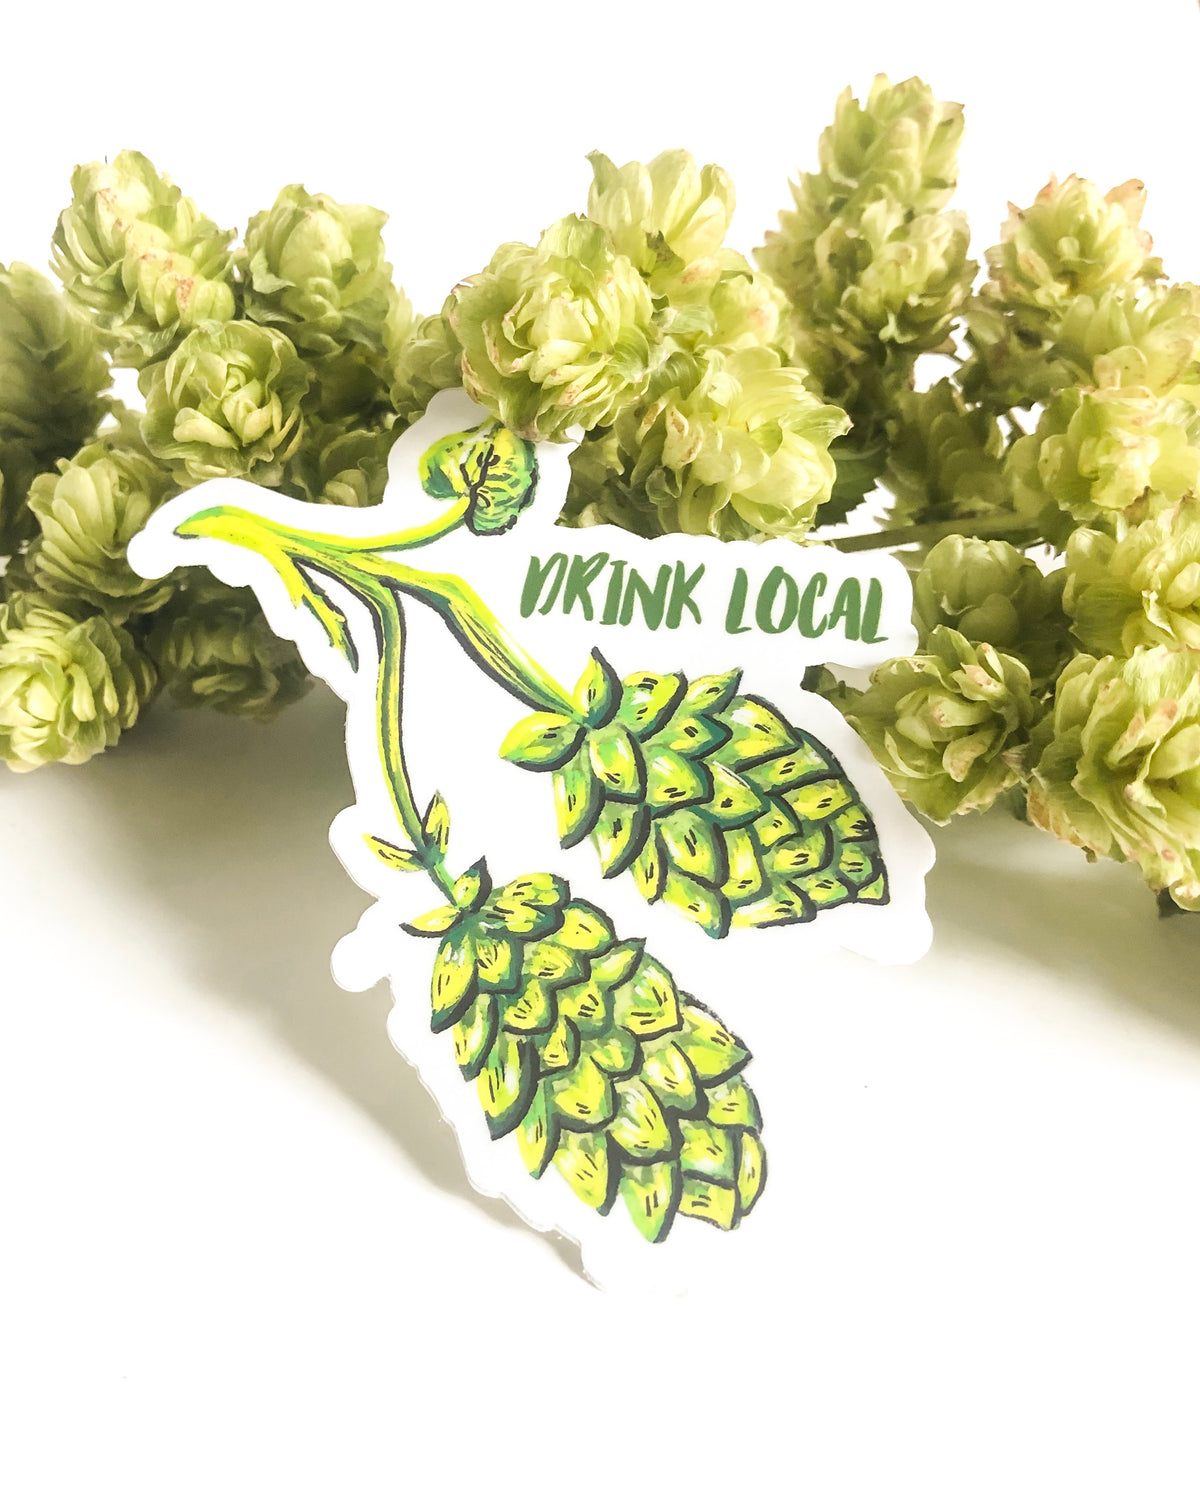 Drink Local Hops Sticker